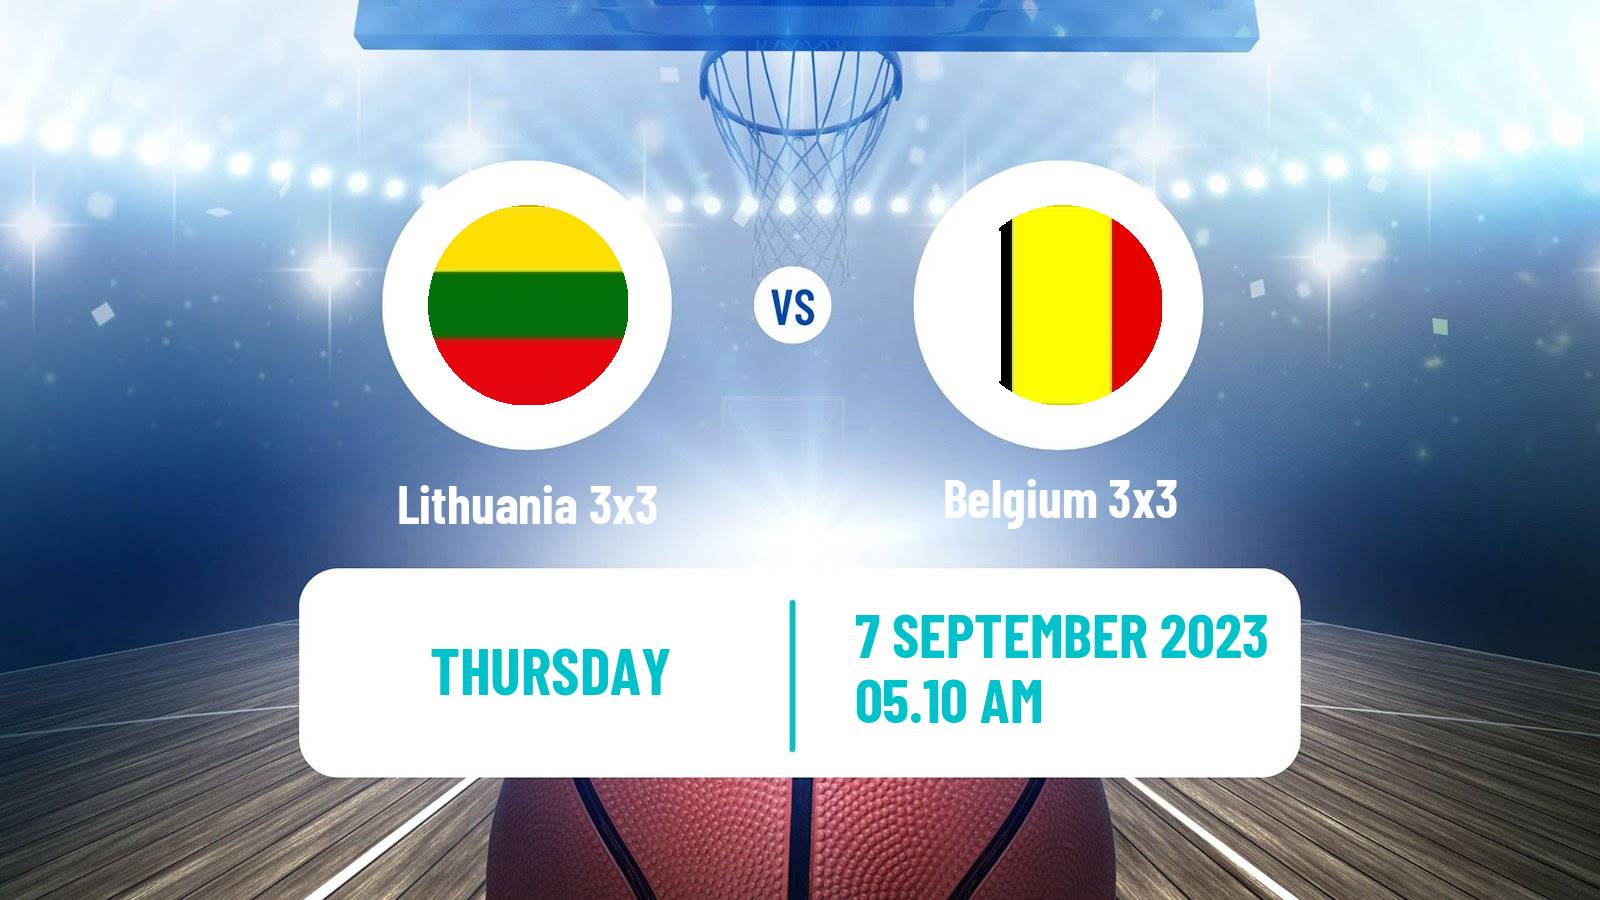 Basketball Europe Cup Basketball 3x3 Lithuania 3x3 - Belgium 3x3